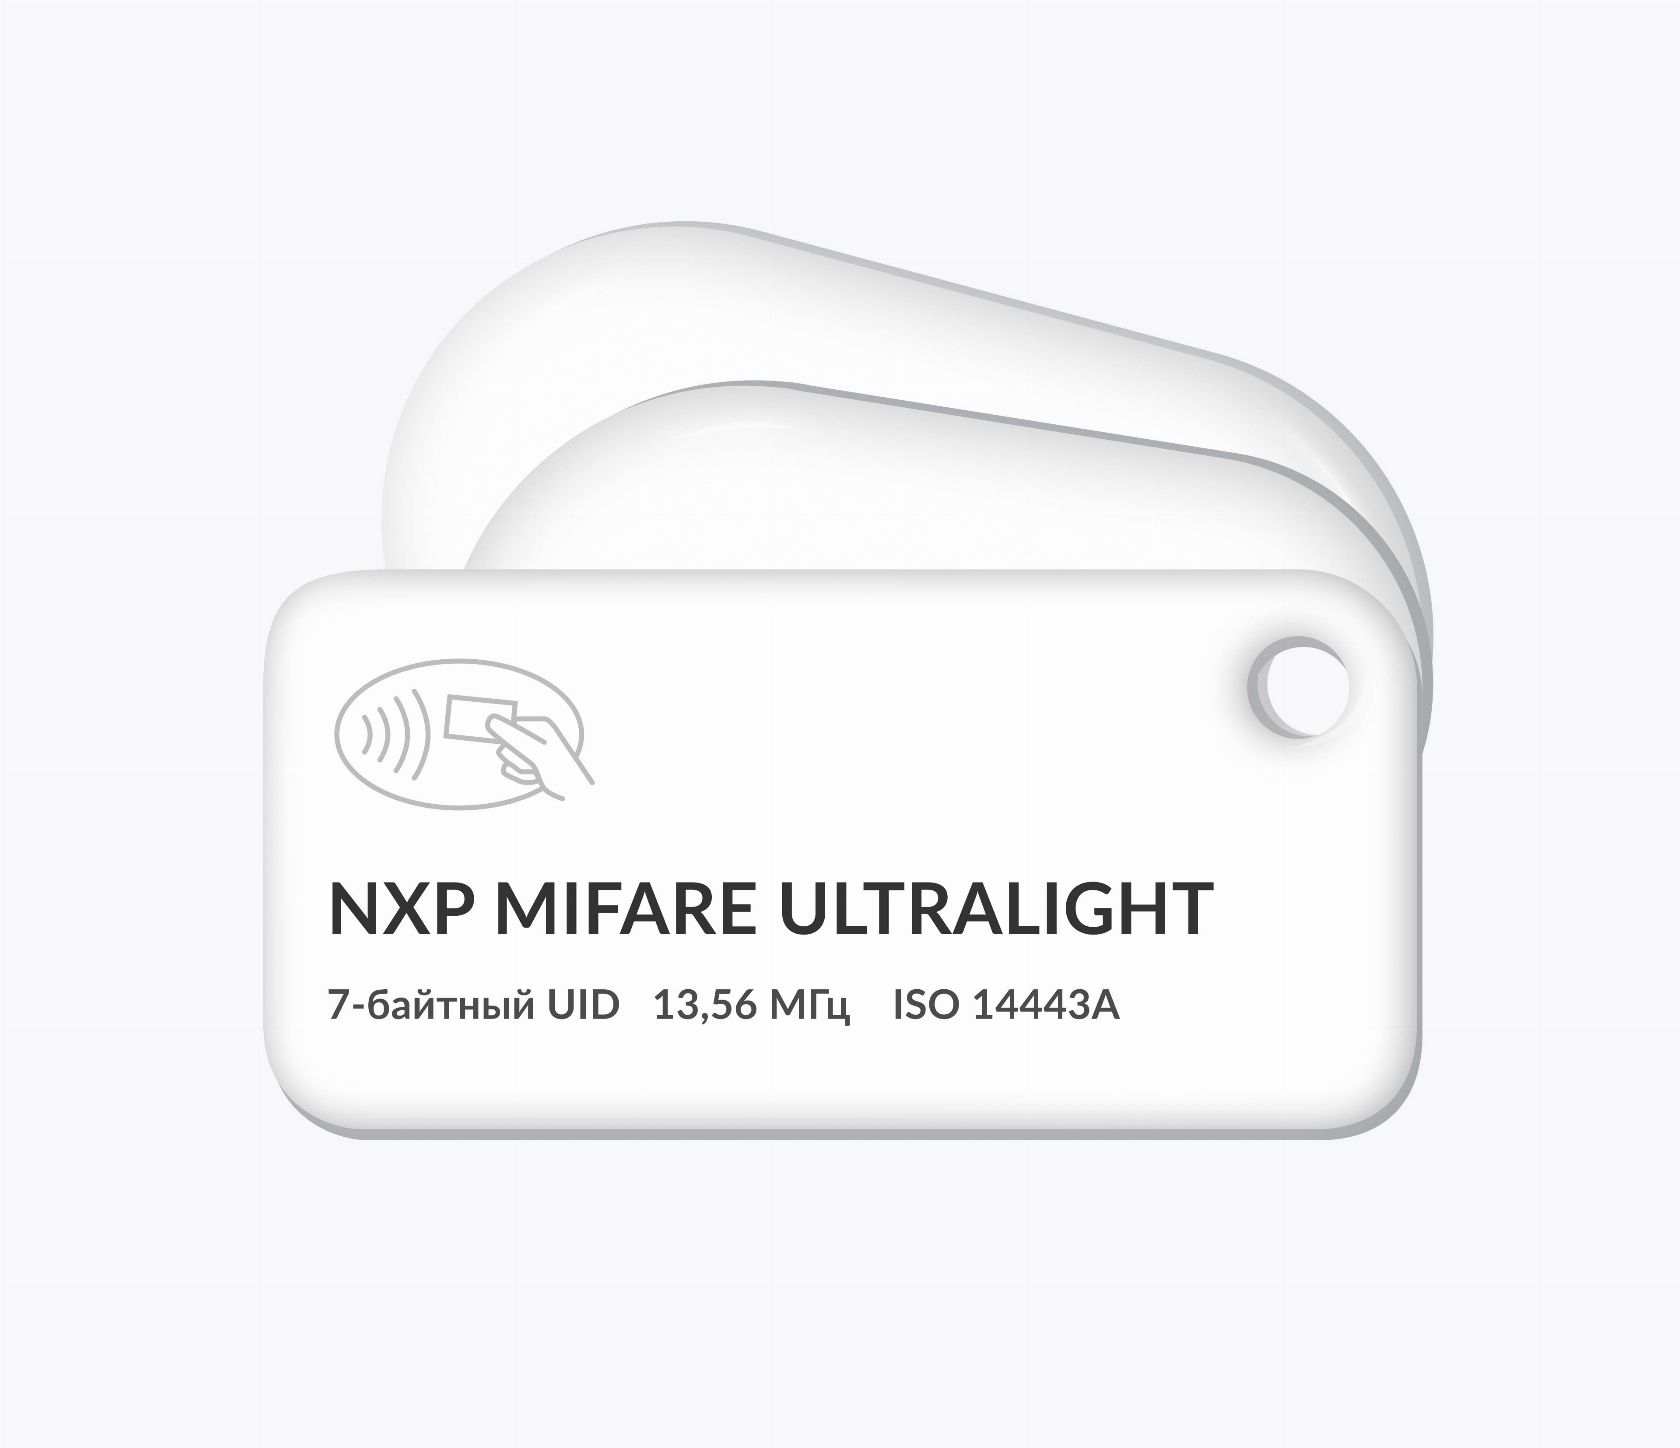 RFID-брелоки NEOKEY® с чипом NXP MIFARE Ultralight 7 byte UID и вашим логотипом